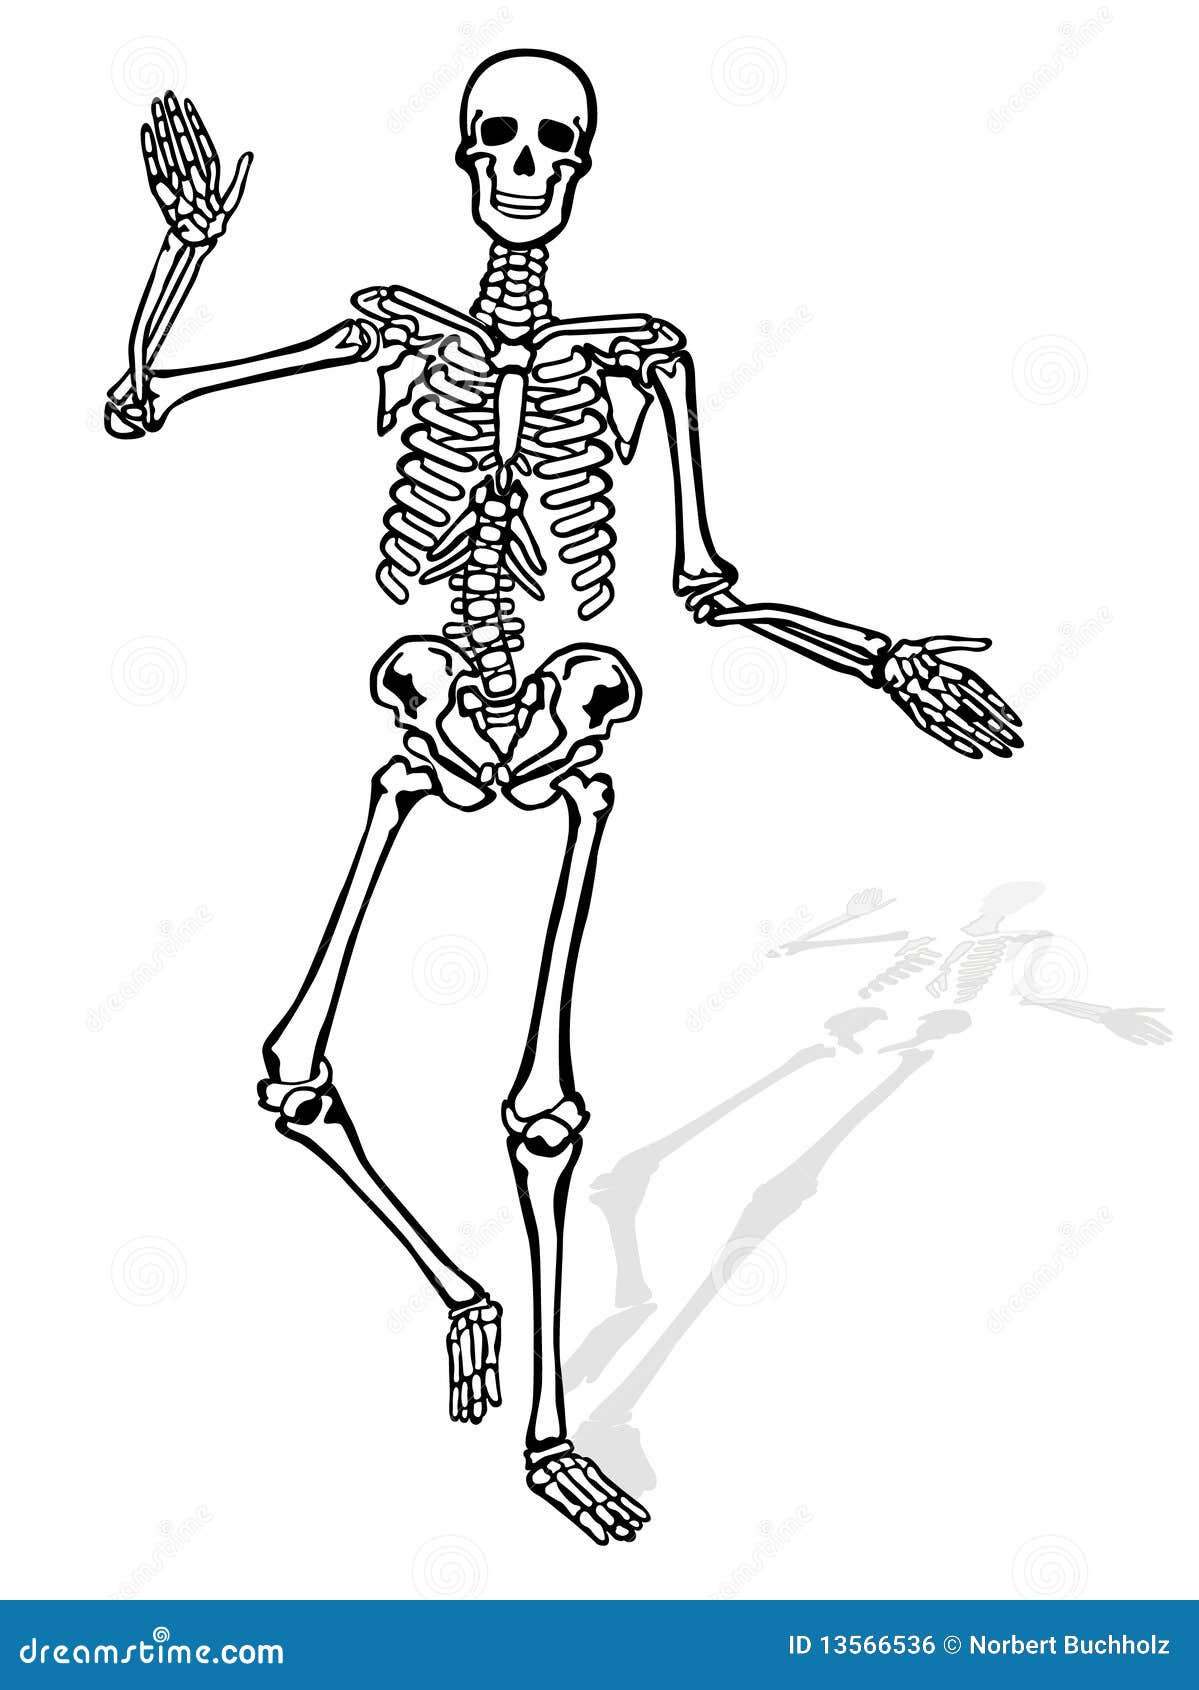 clip art human skeleton - photo #28